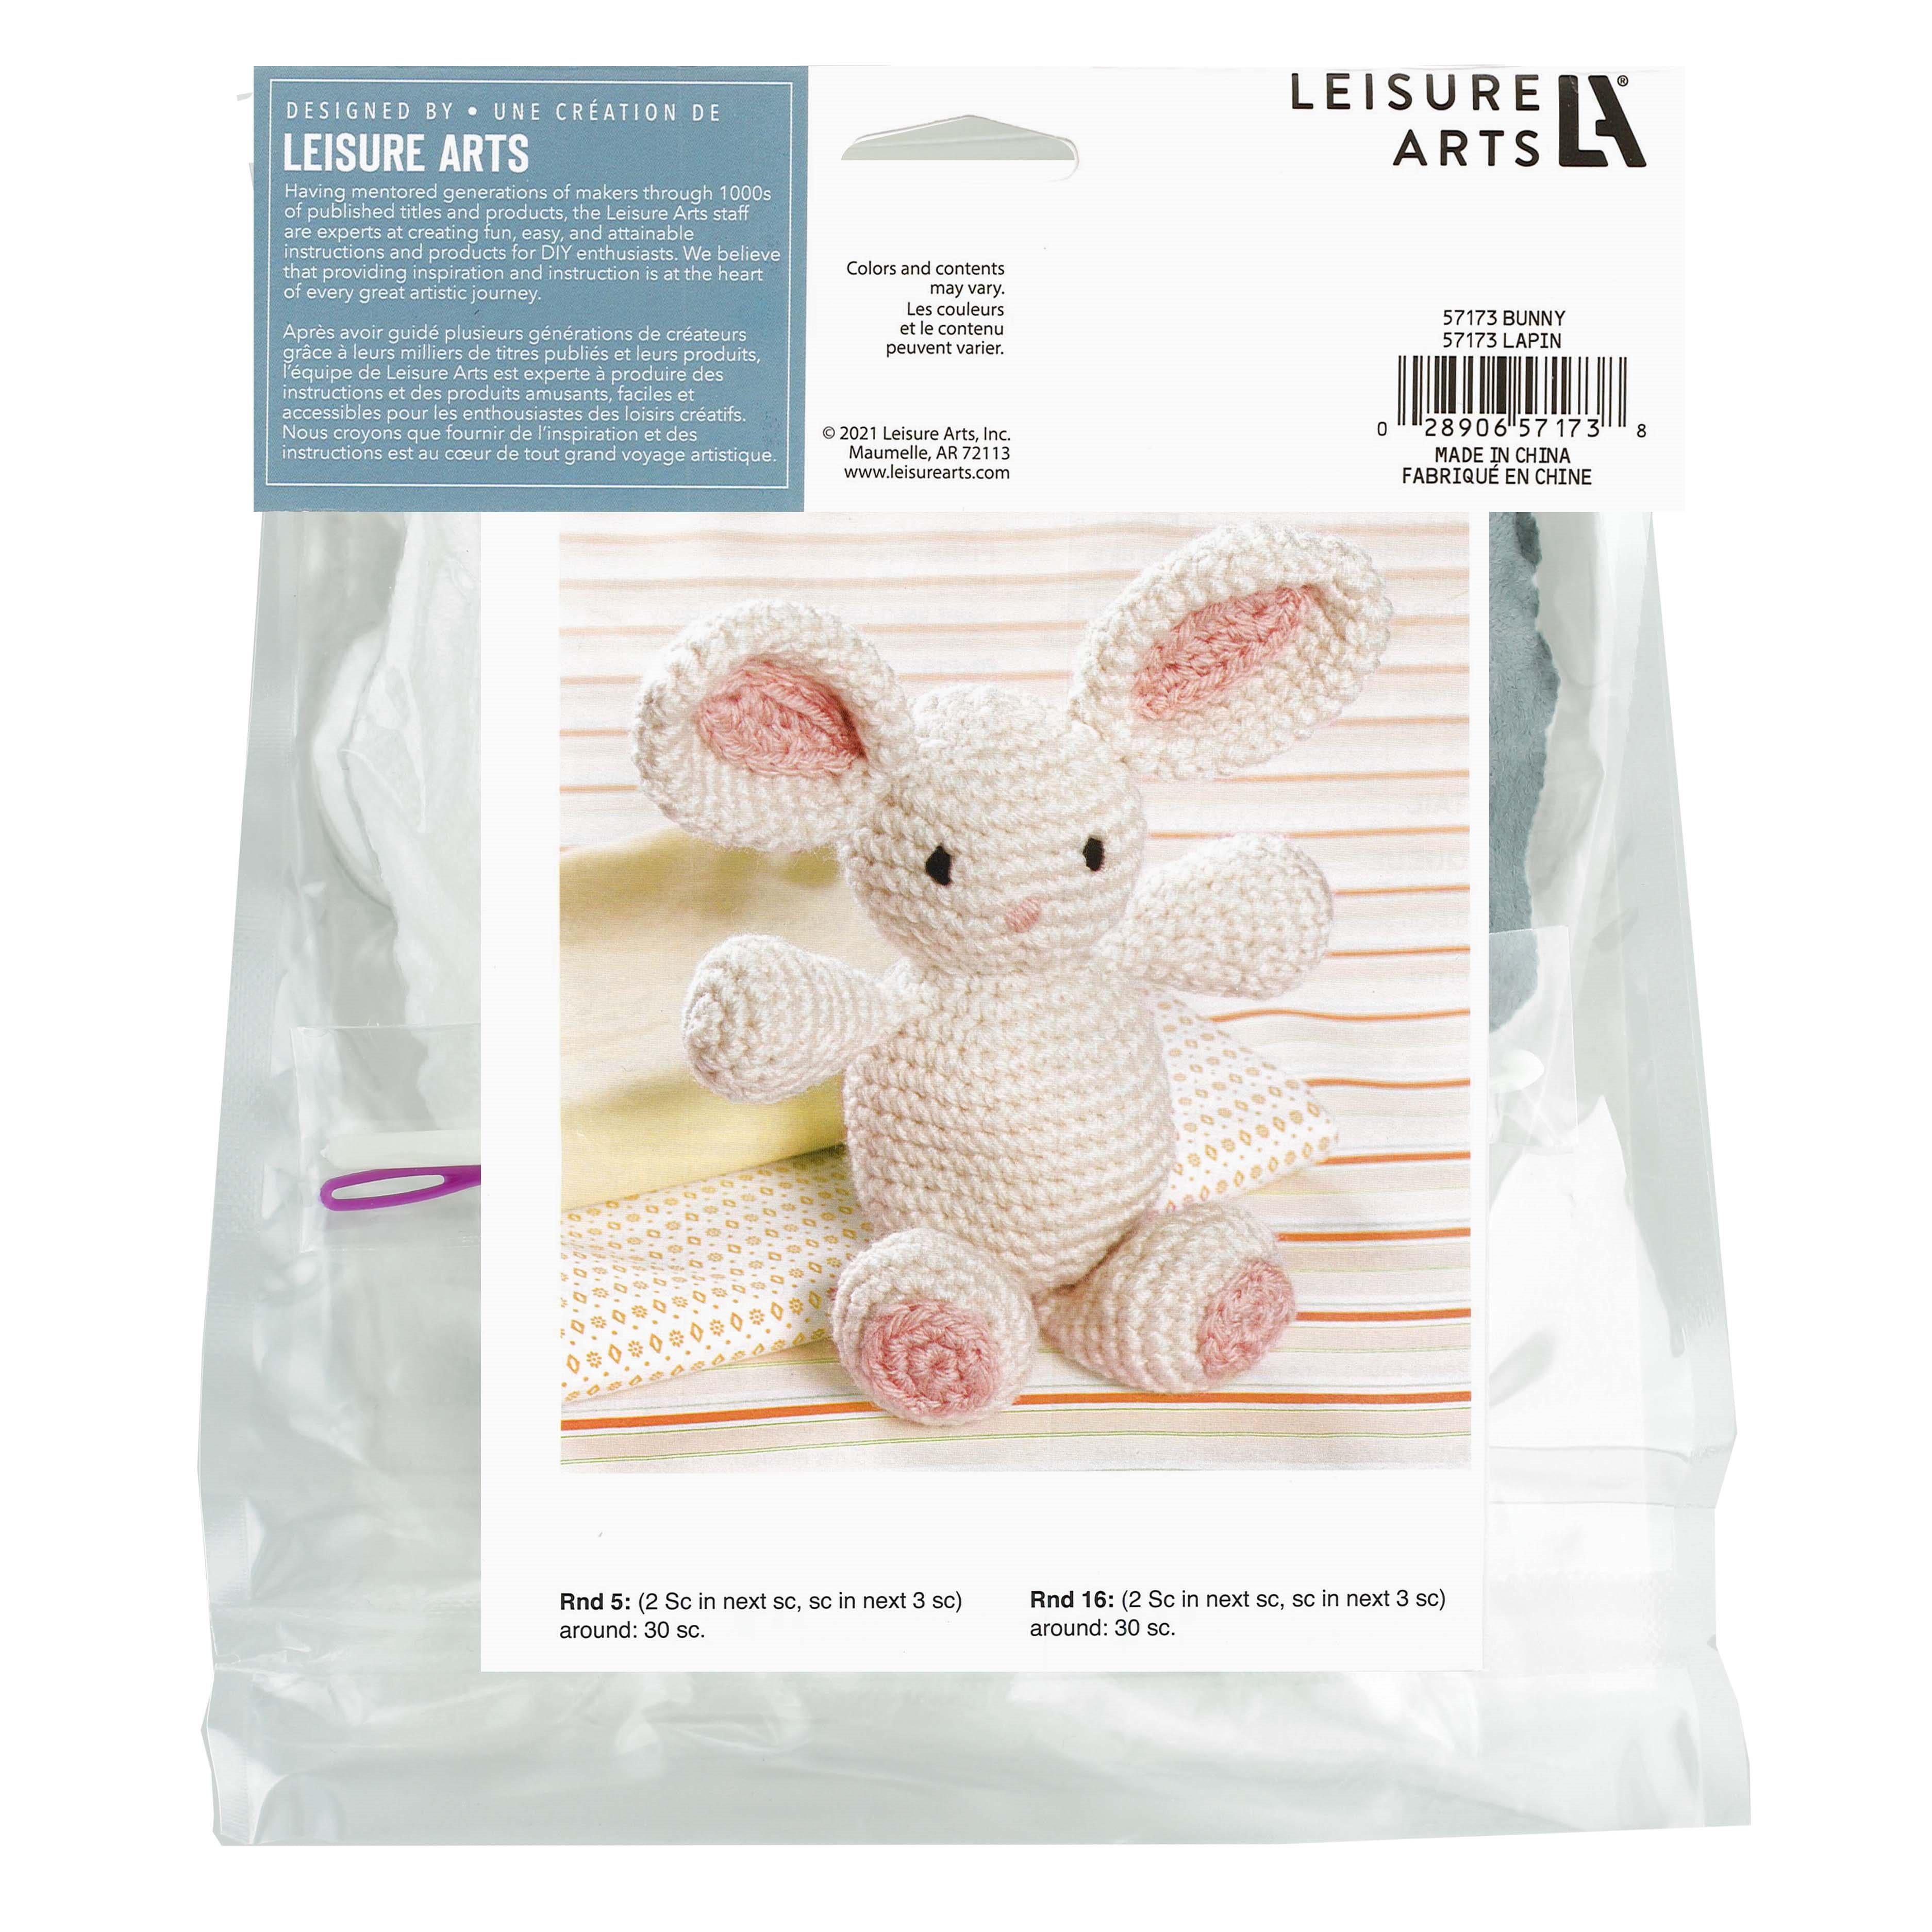 Leisure Arts&#xAE; Make A Little Friend Bunny Kit